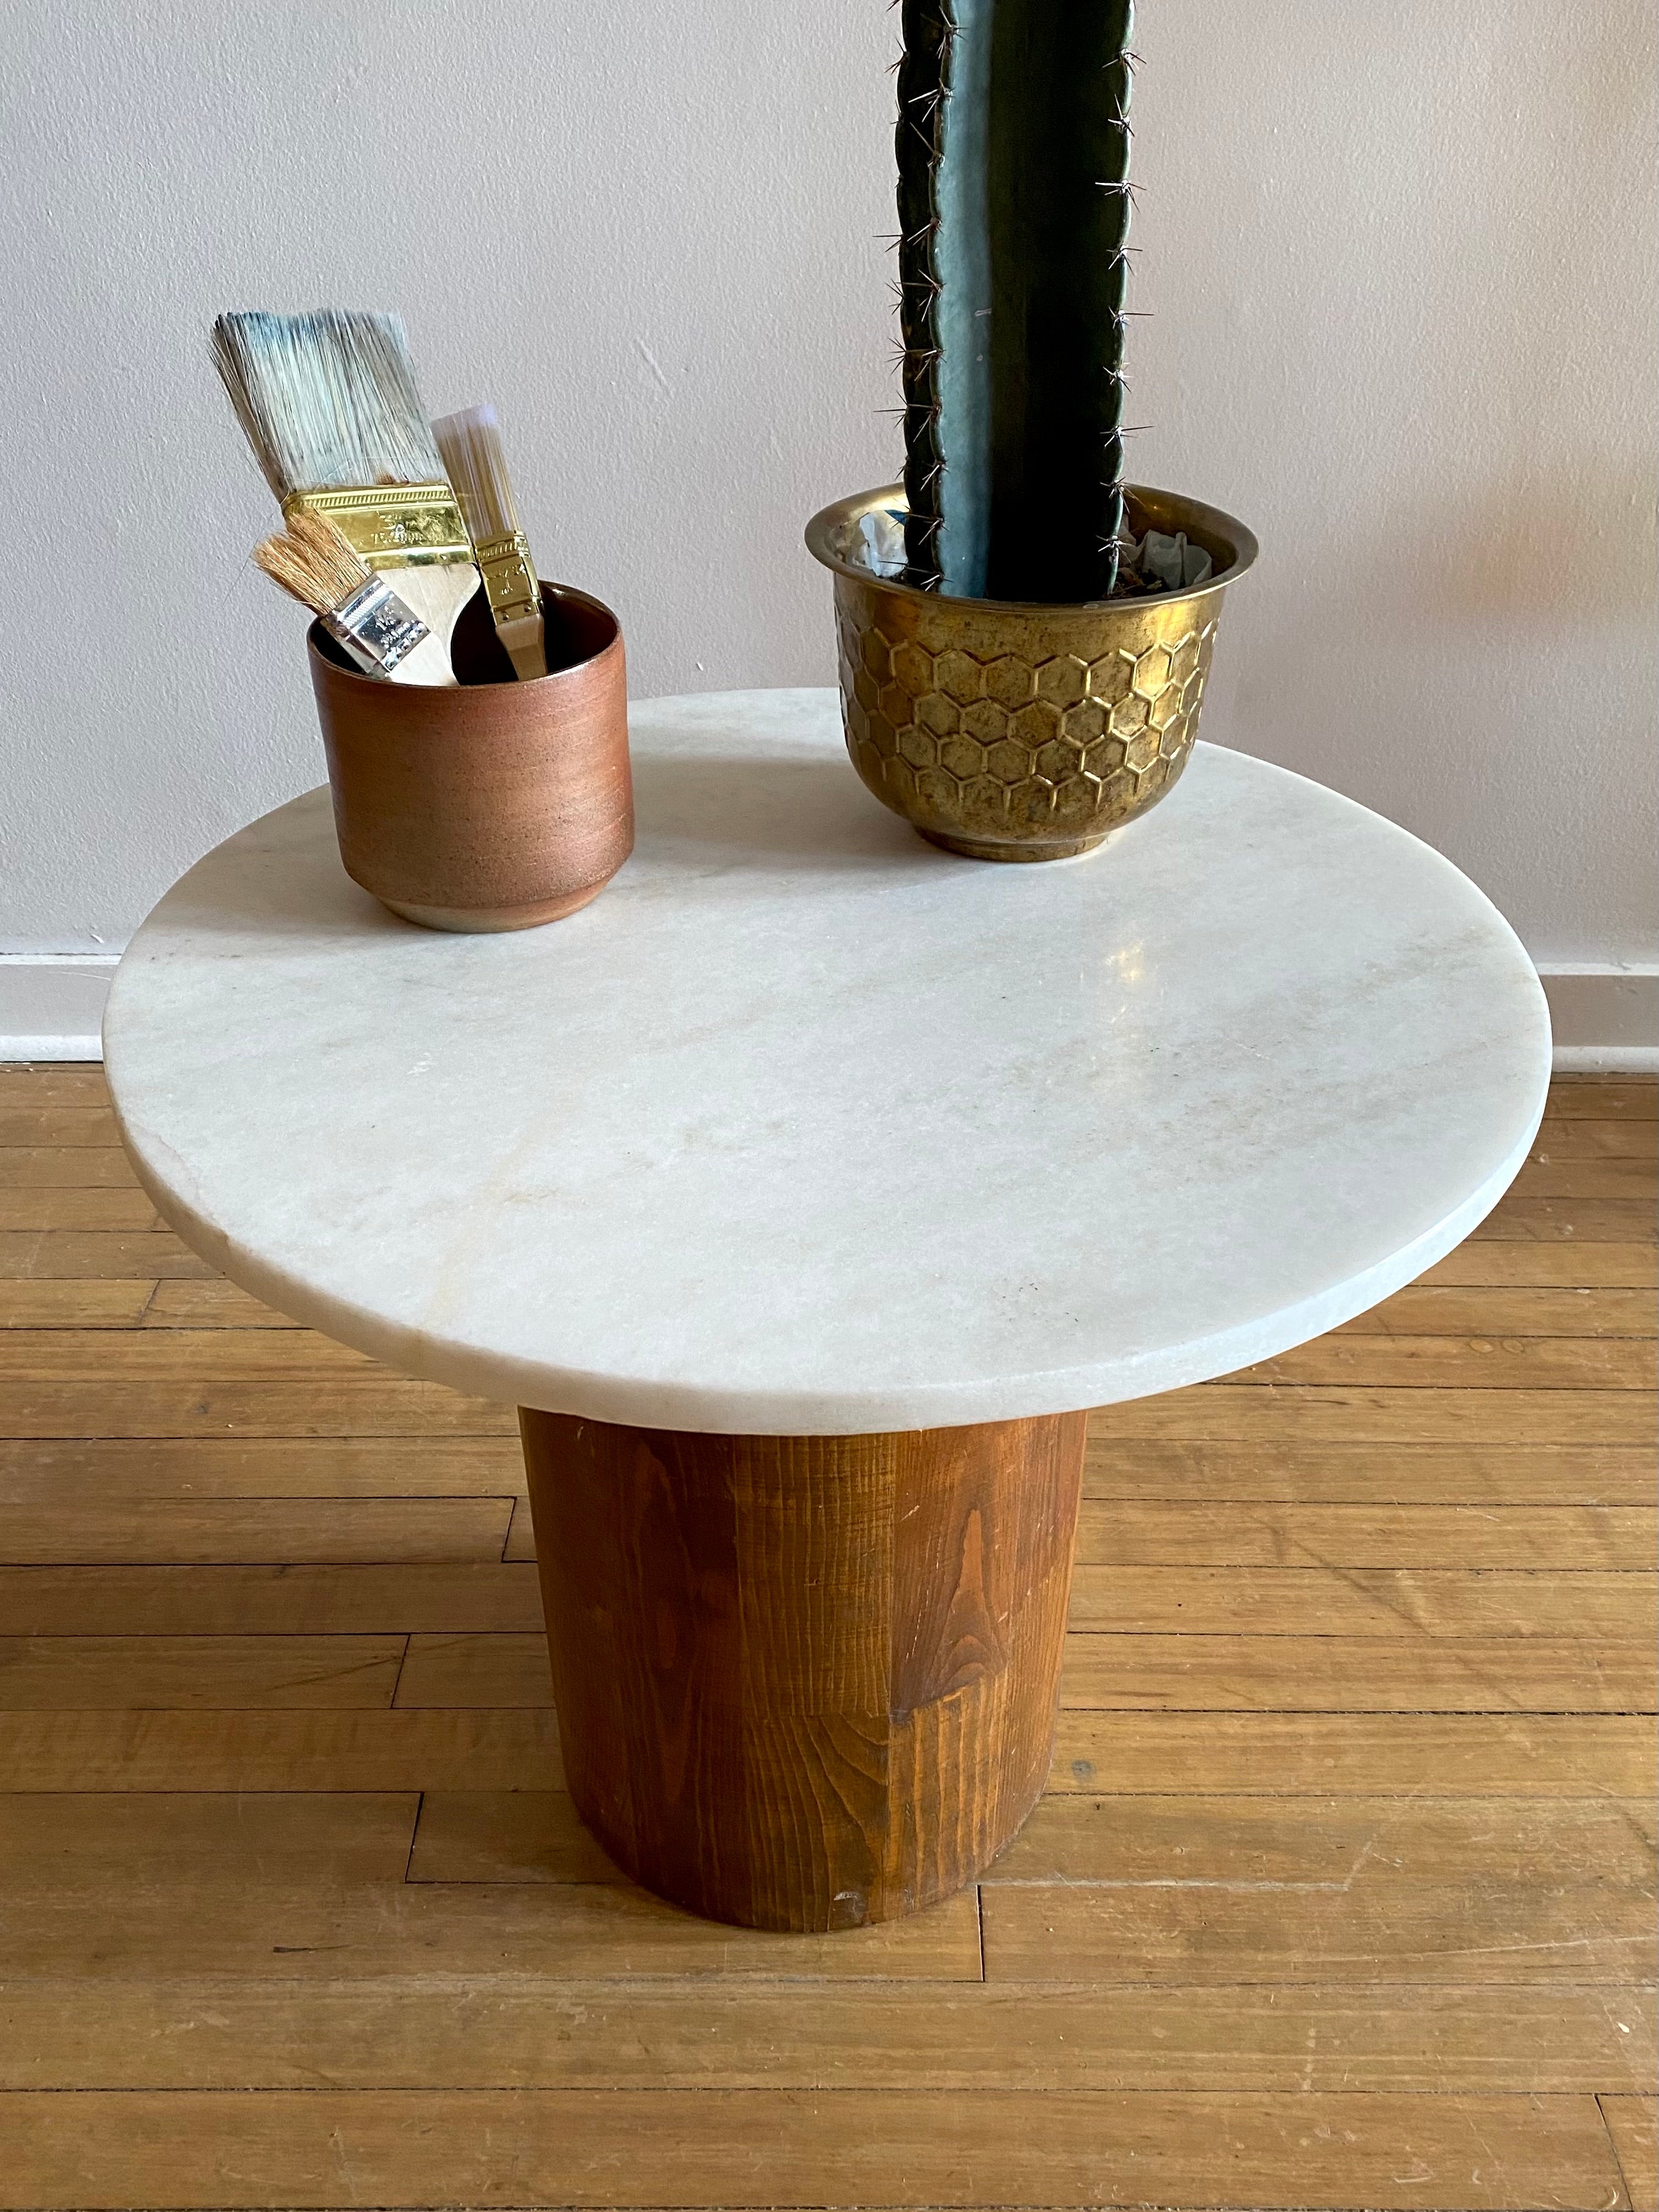 Vintage Marble Top Side Table